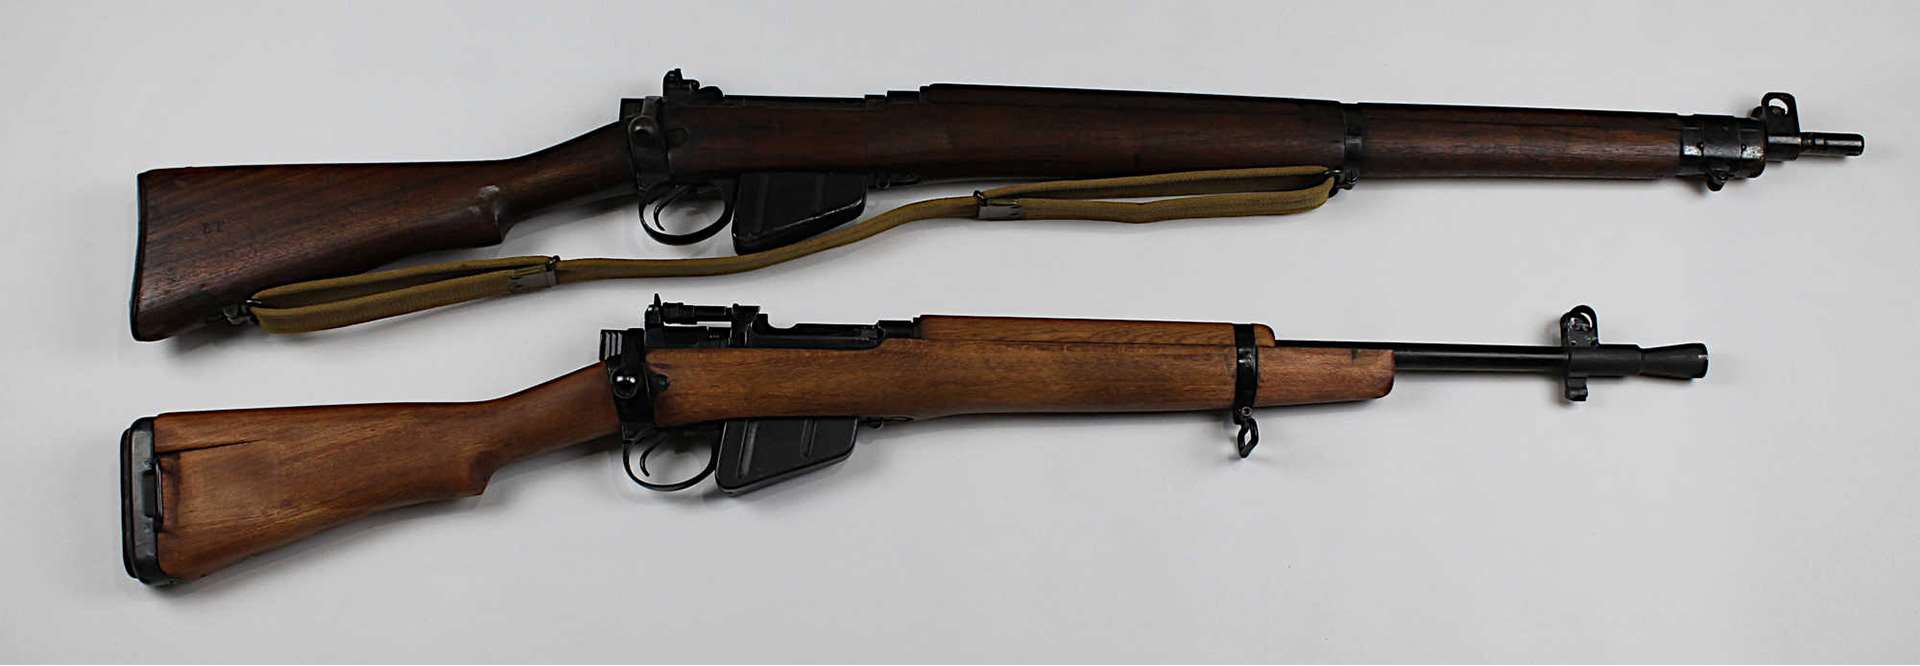 Enfield Rifles